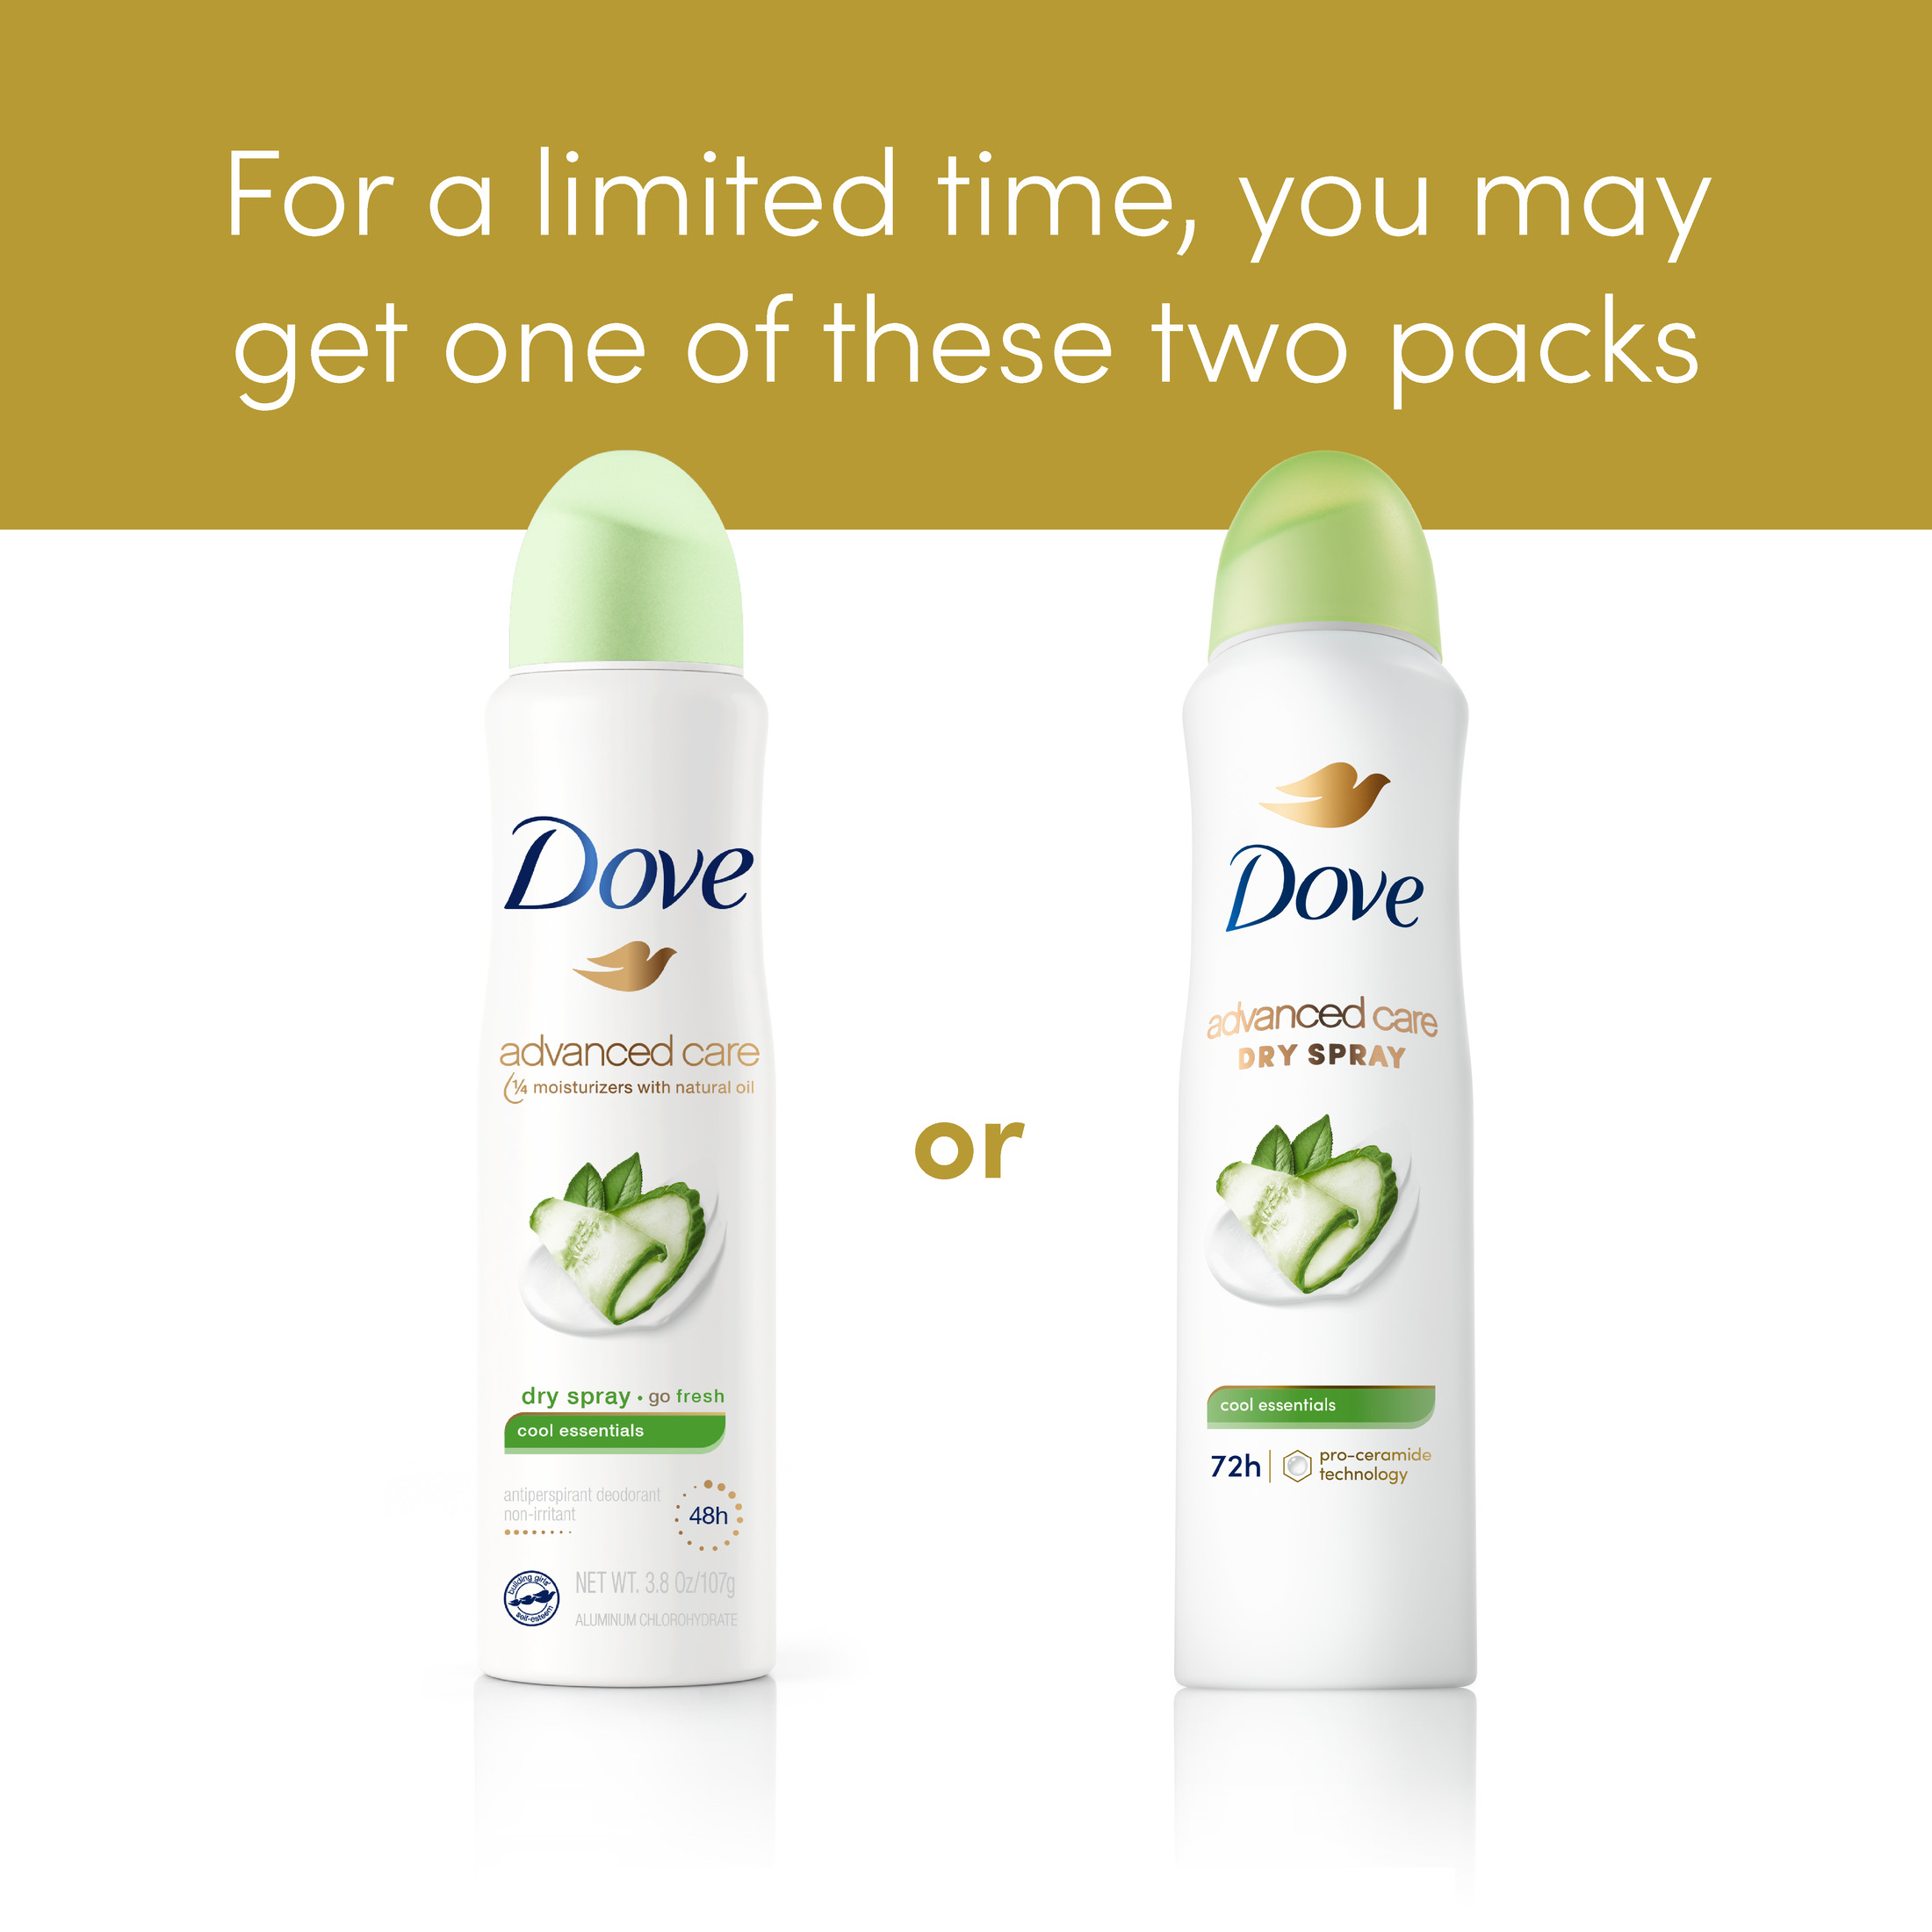 Dove Advanced Care Long Lasting Women's Antiperspirant Deodorant Dry Spray, Cool Essentials, 3.8 oz - image 4 of 11